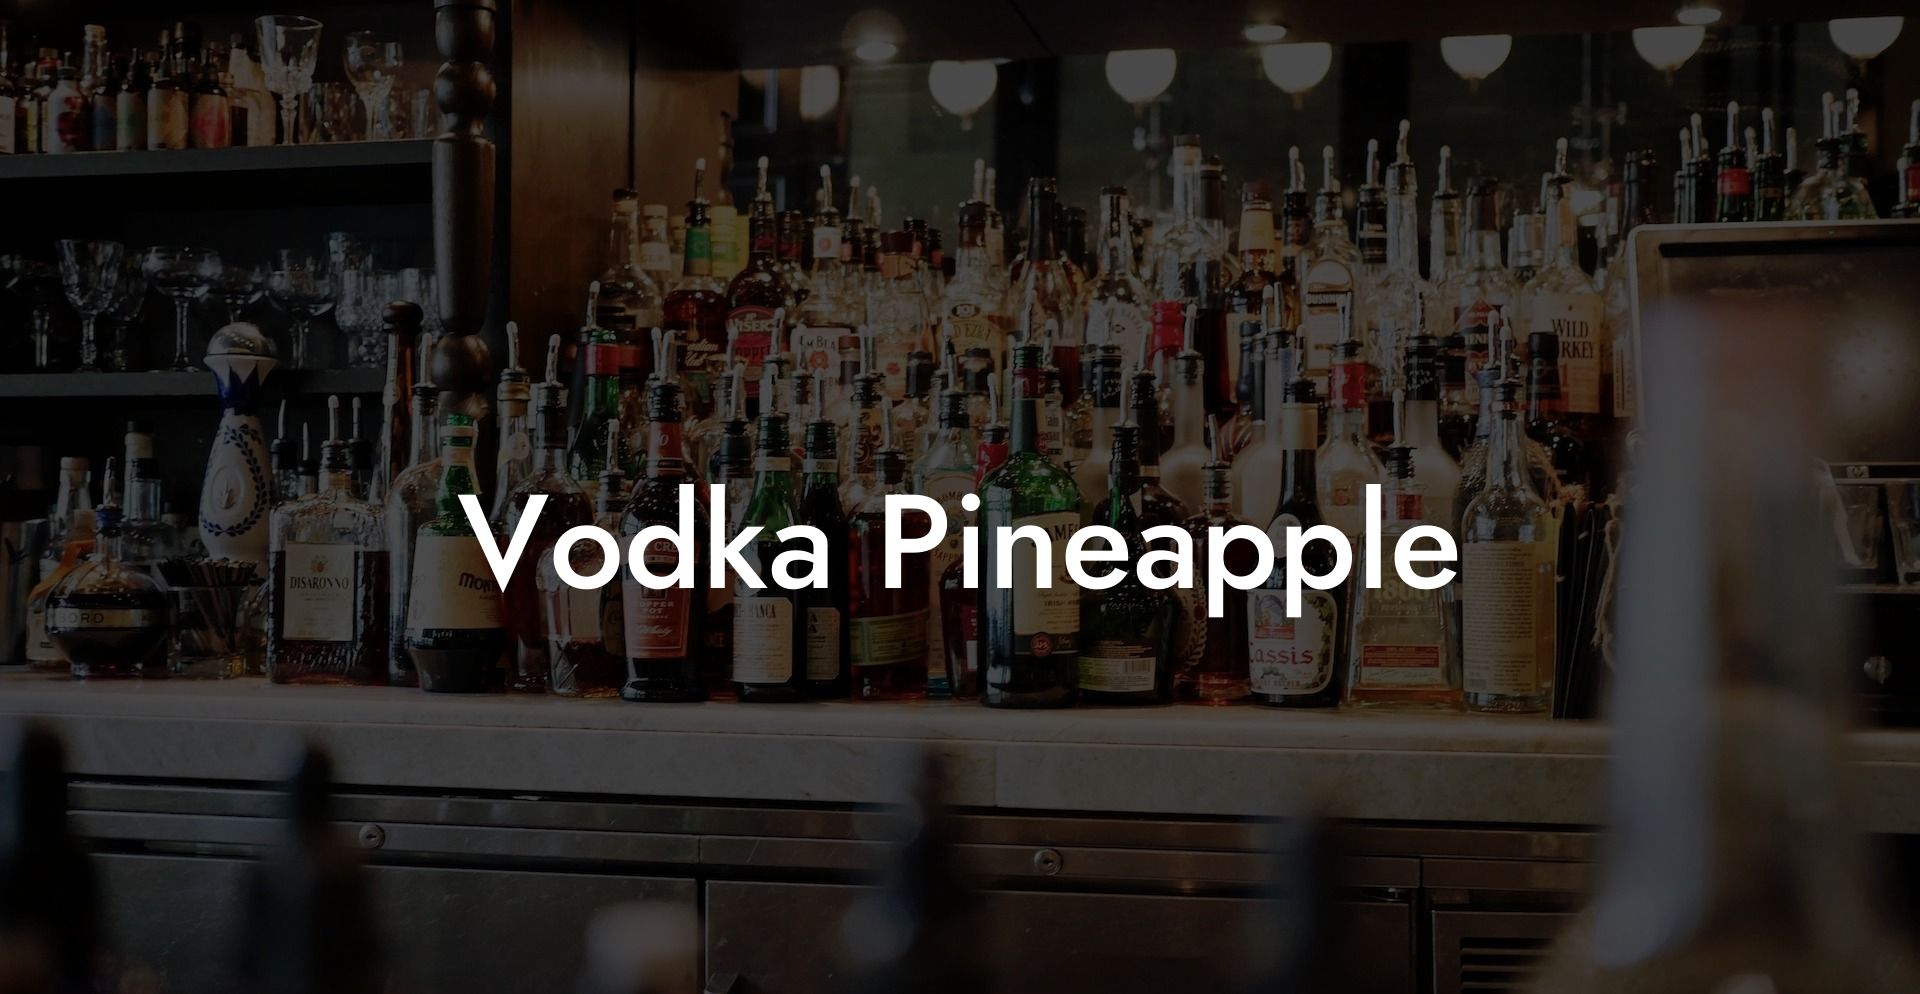 Vodka Pineapple